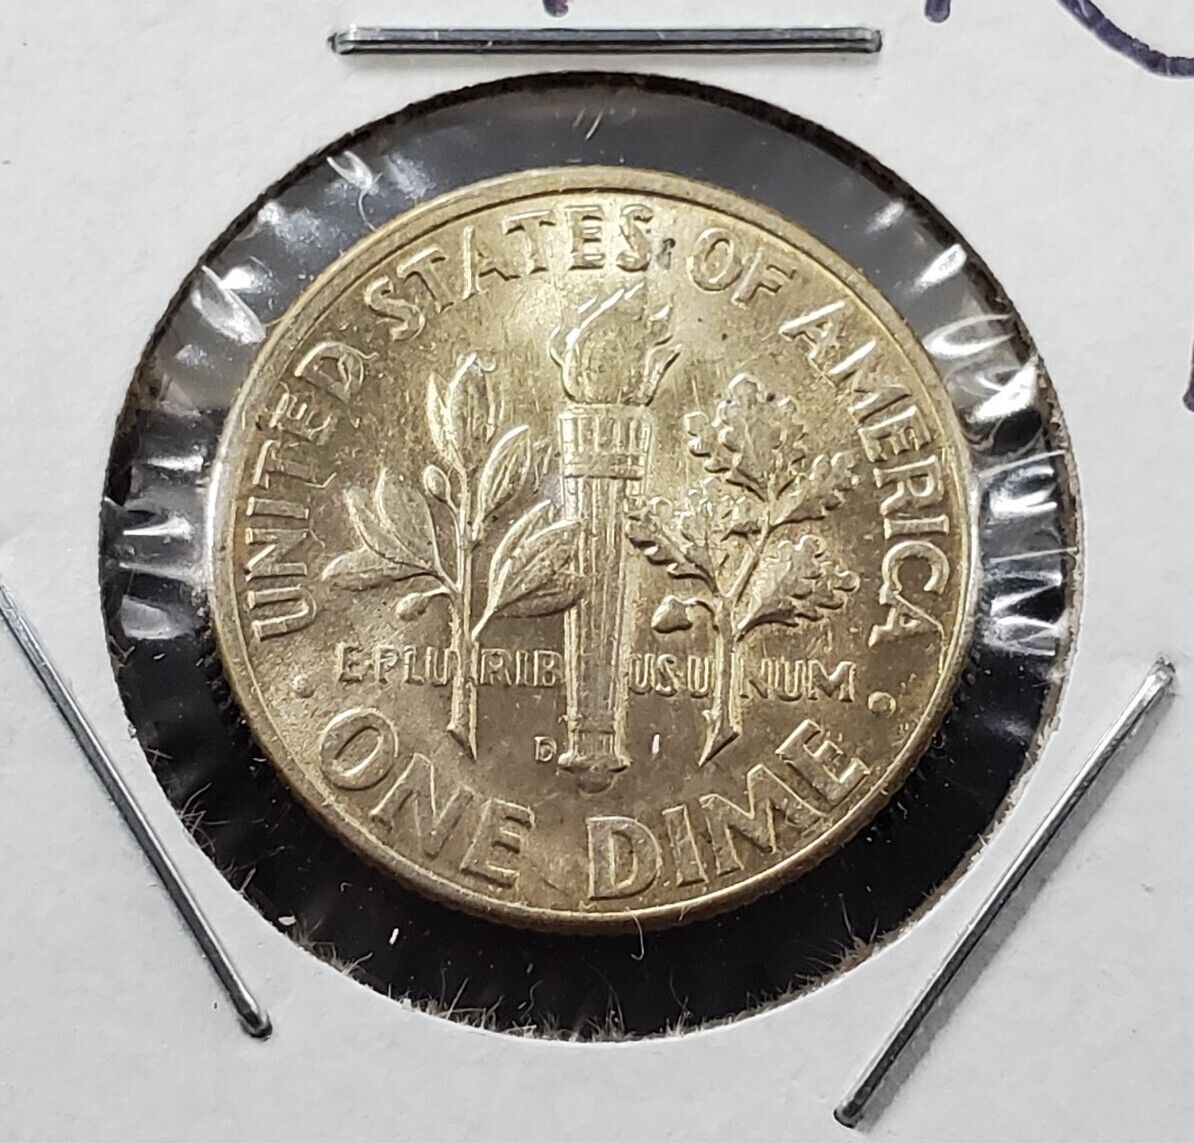 1951 D/D Roosevelt Silver Dime Coin RPM 001 FS-501 Choice / Gem BU UNC